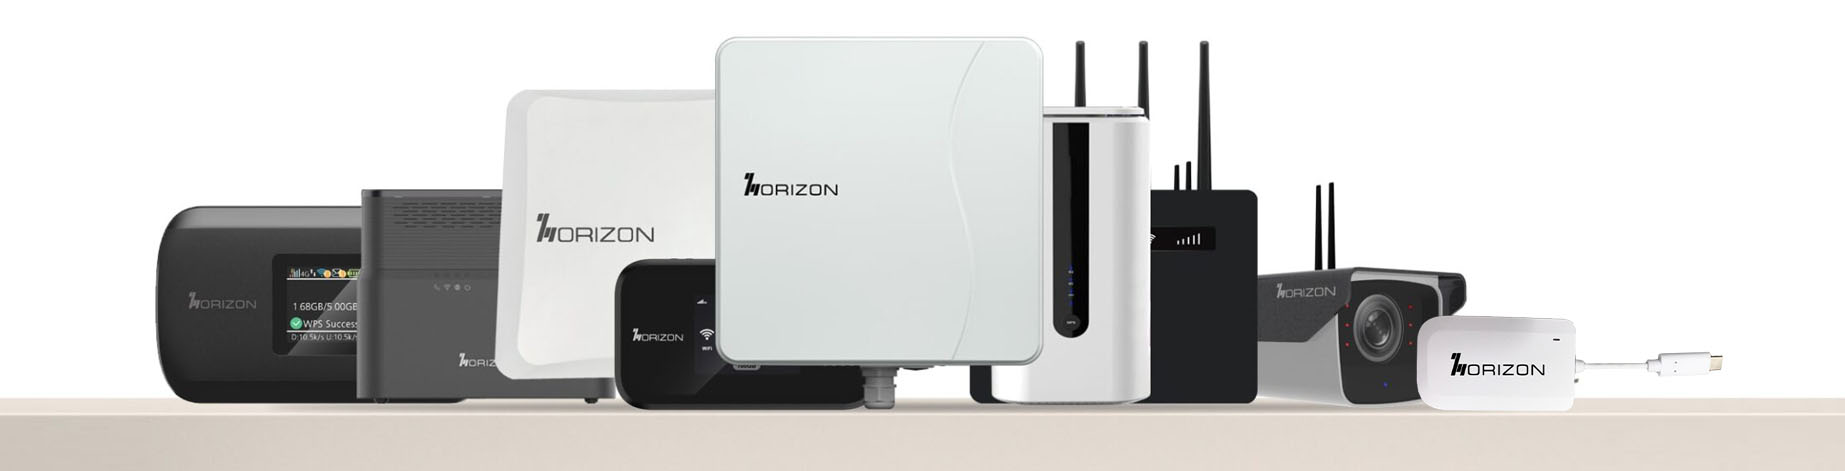 horizon products